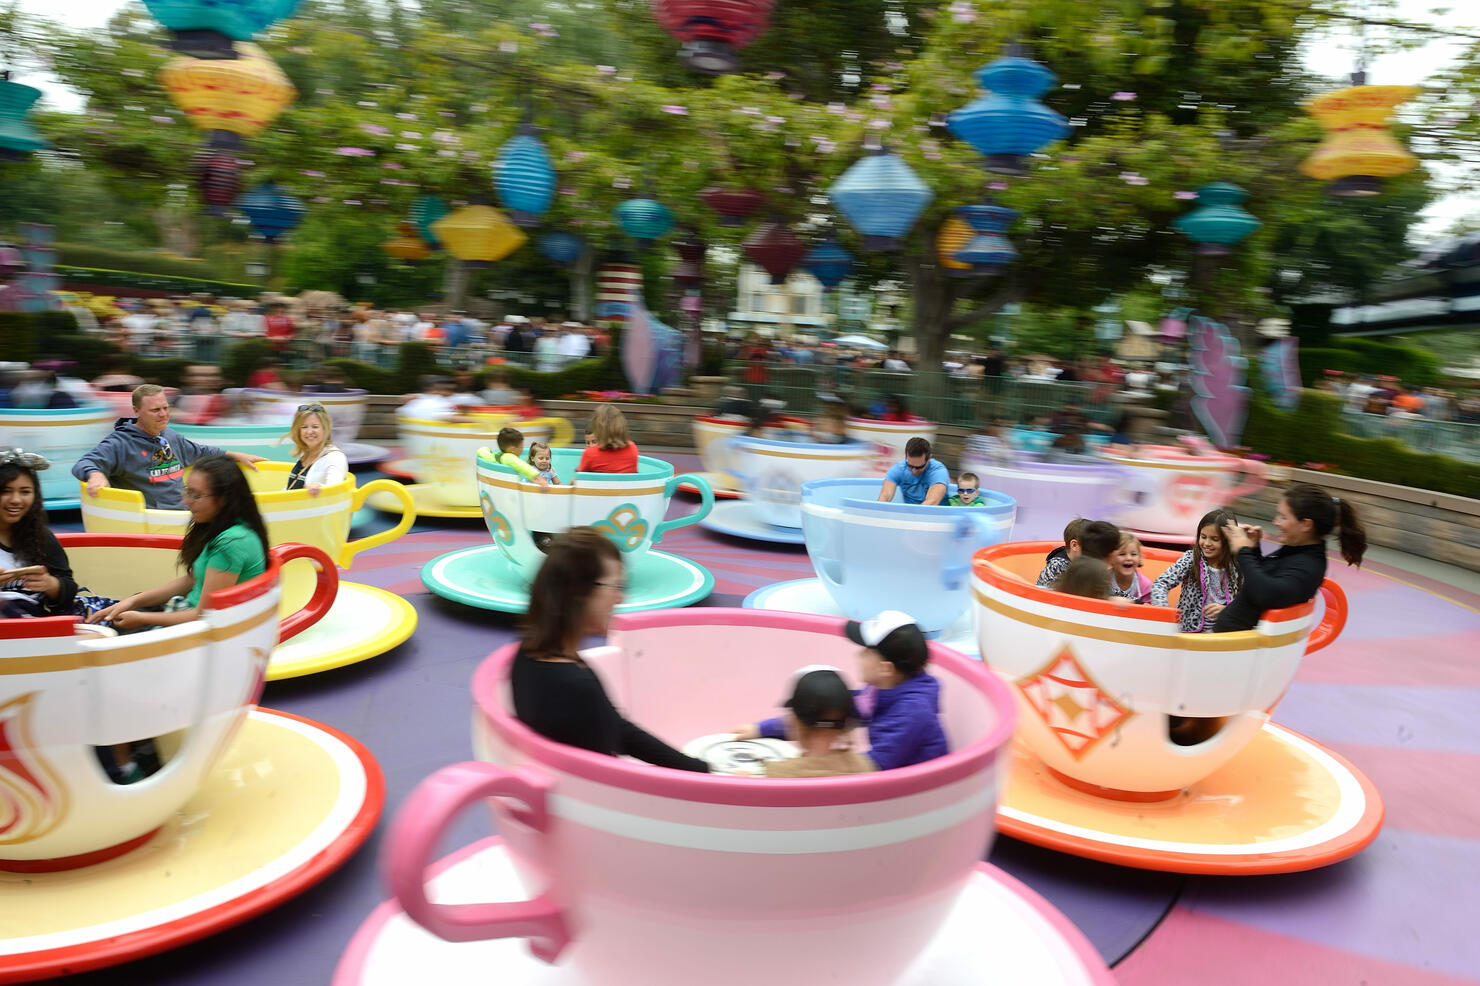 COVID-19: Disney Lays Off 28,000 Employees At Disneyland And Walt Disney World